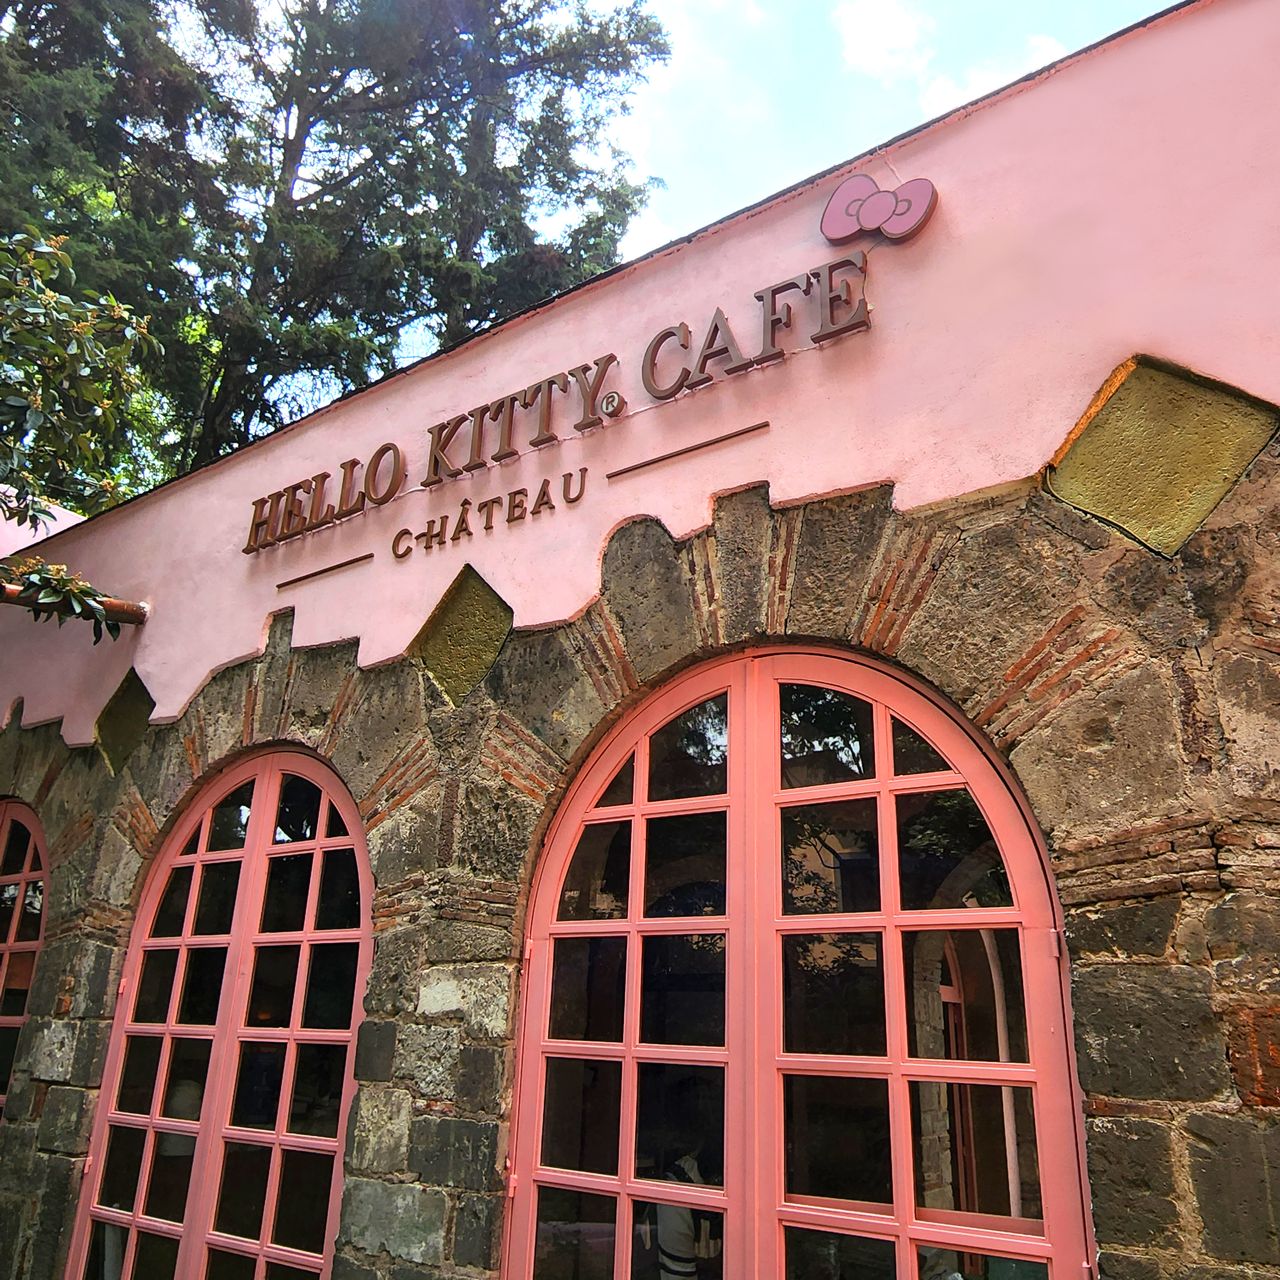 Hello Kitty Cafe Restaurant - Ciudad de México, CDMX